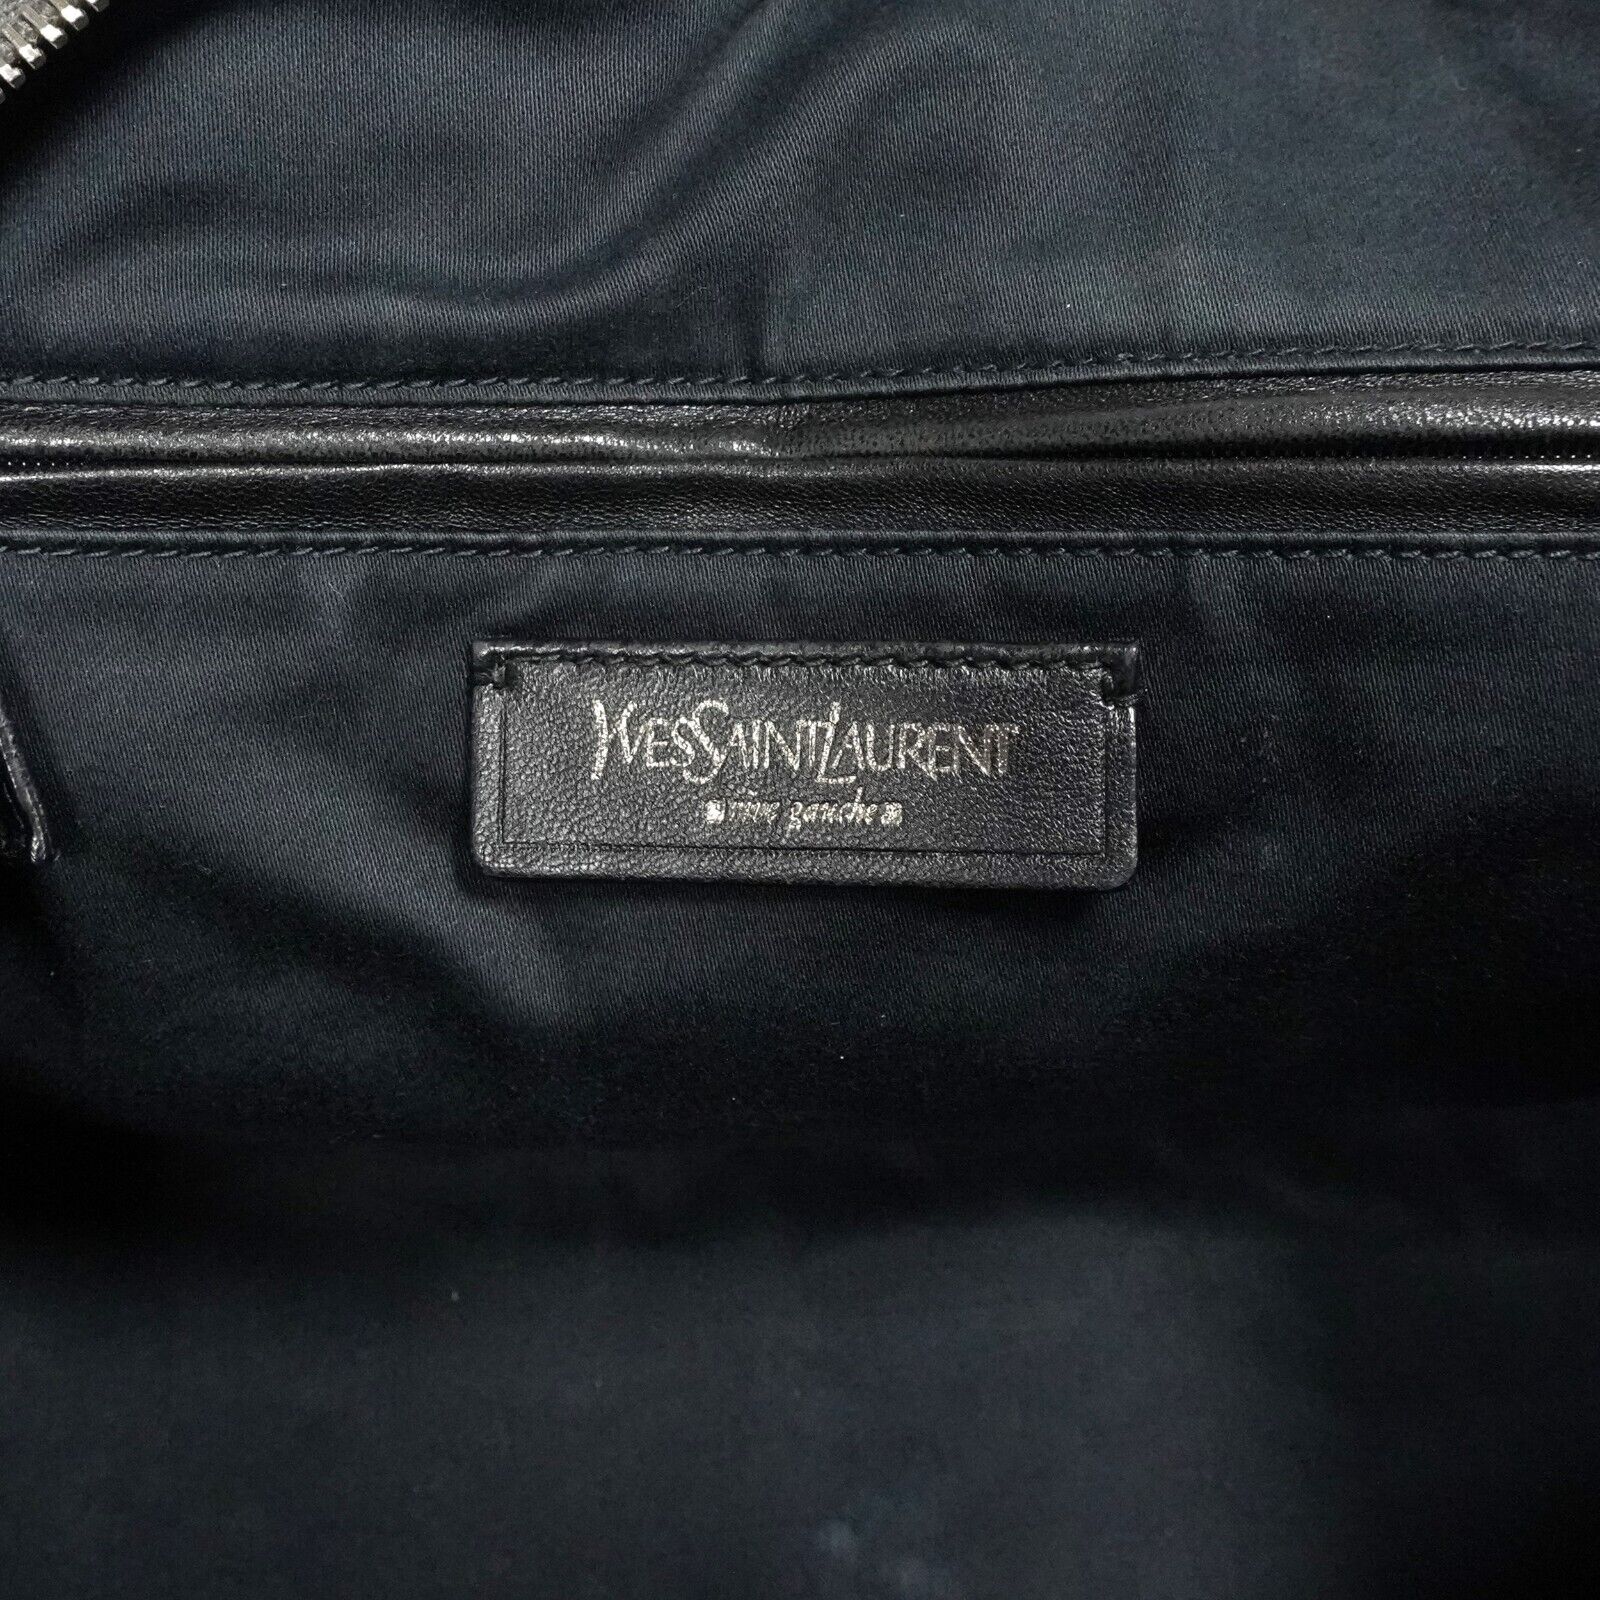 Yves Saint Laurent Easy Patent Leather Boston Bag Olive